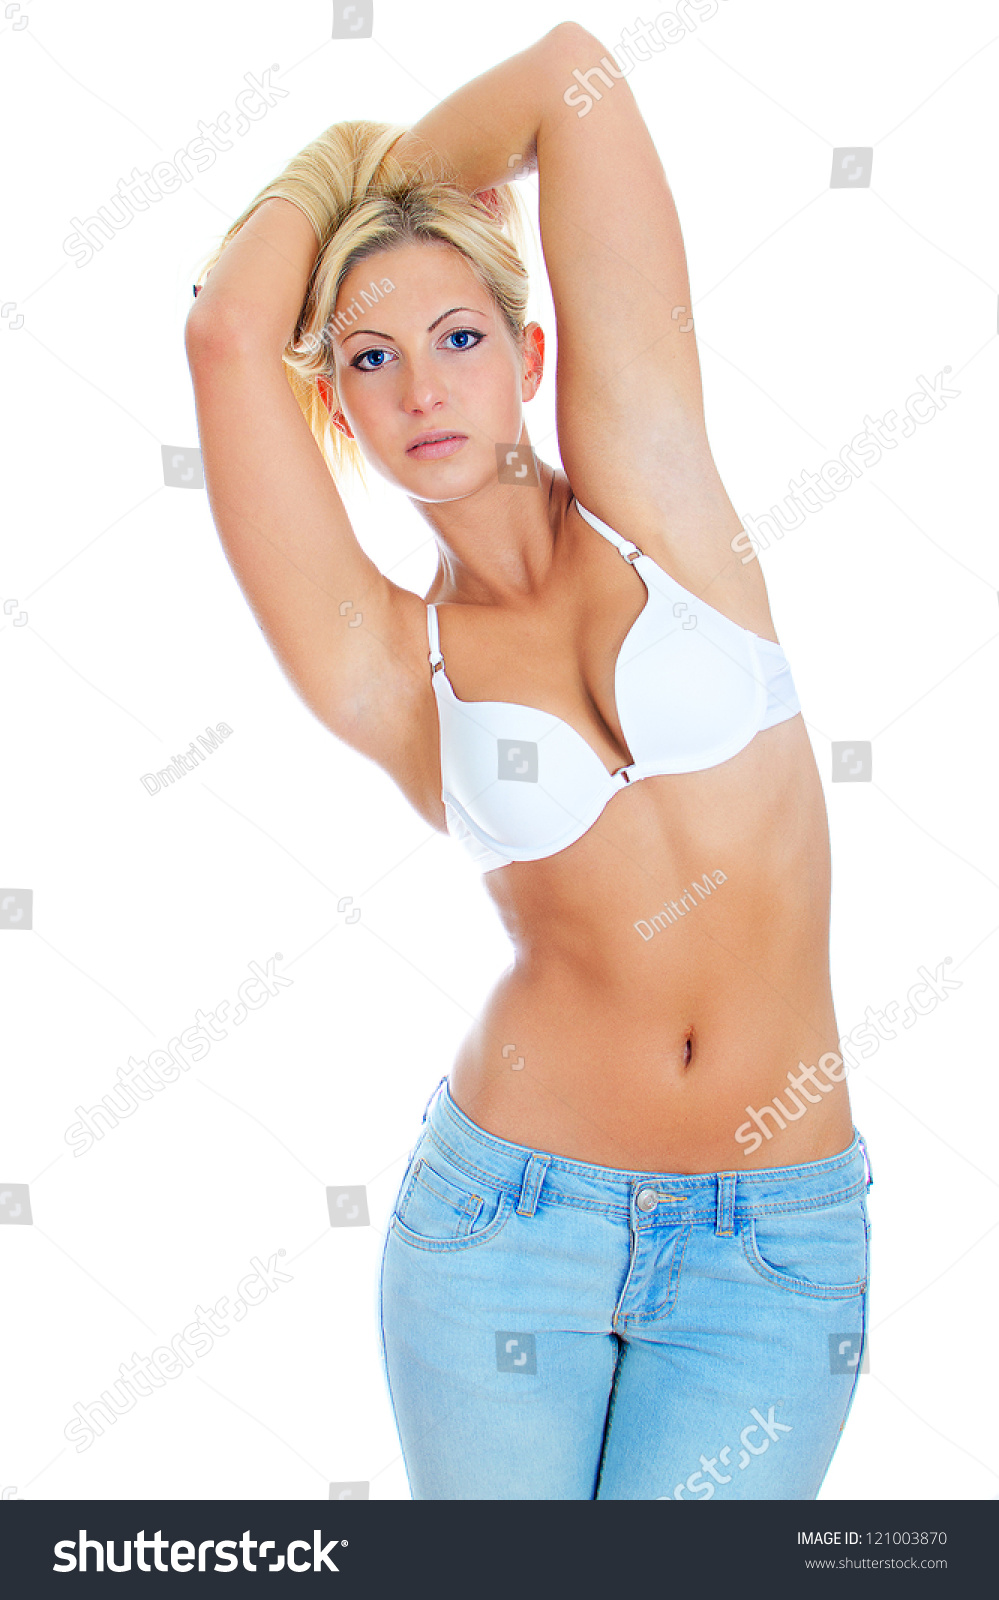 Beautiful Sexy Girl Bra Jeans Shorts Stock Photo 182983937 Shutterstock, Hot Girls In Bra